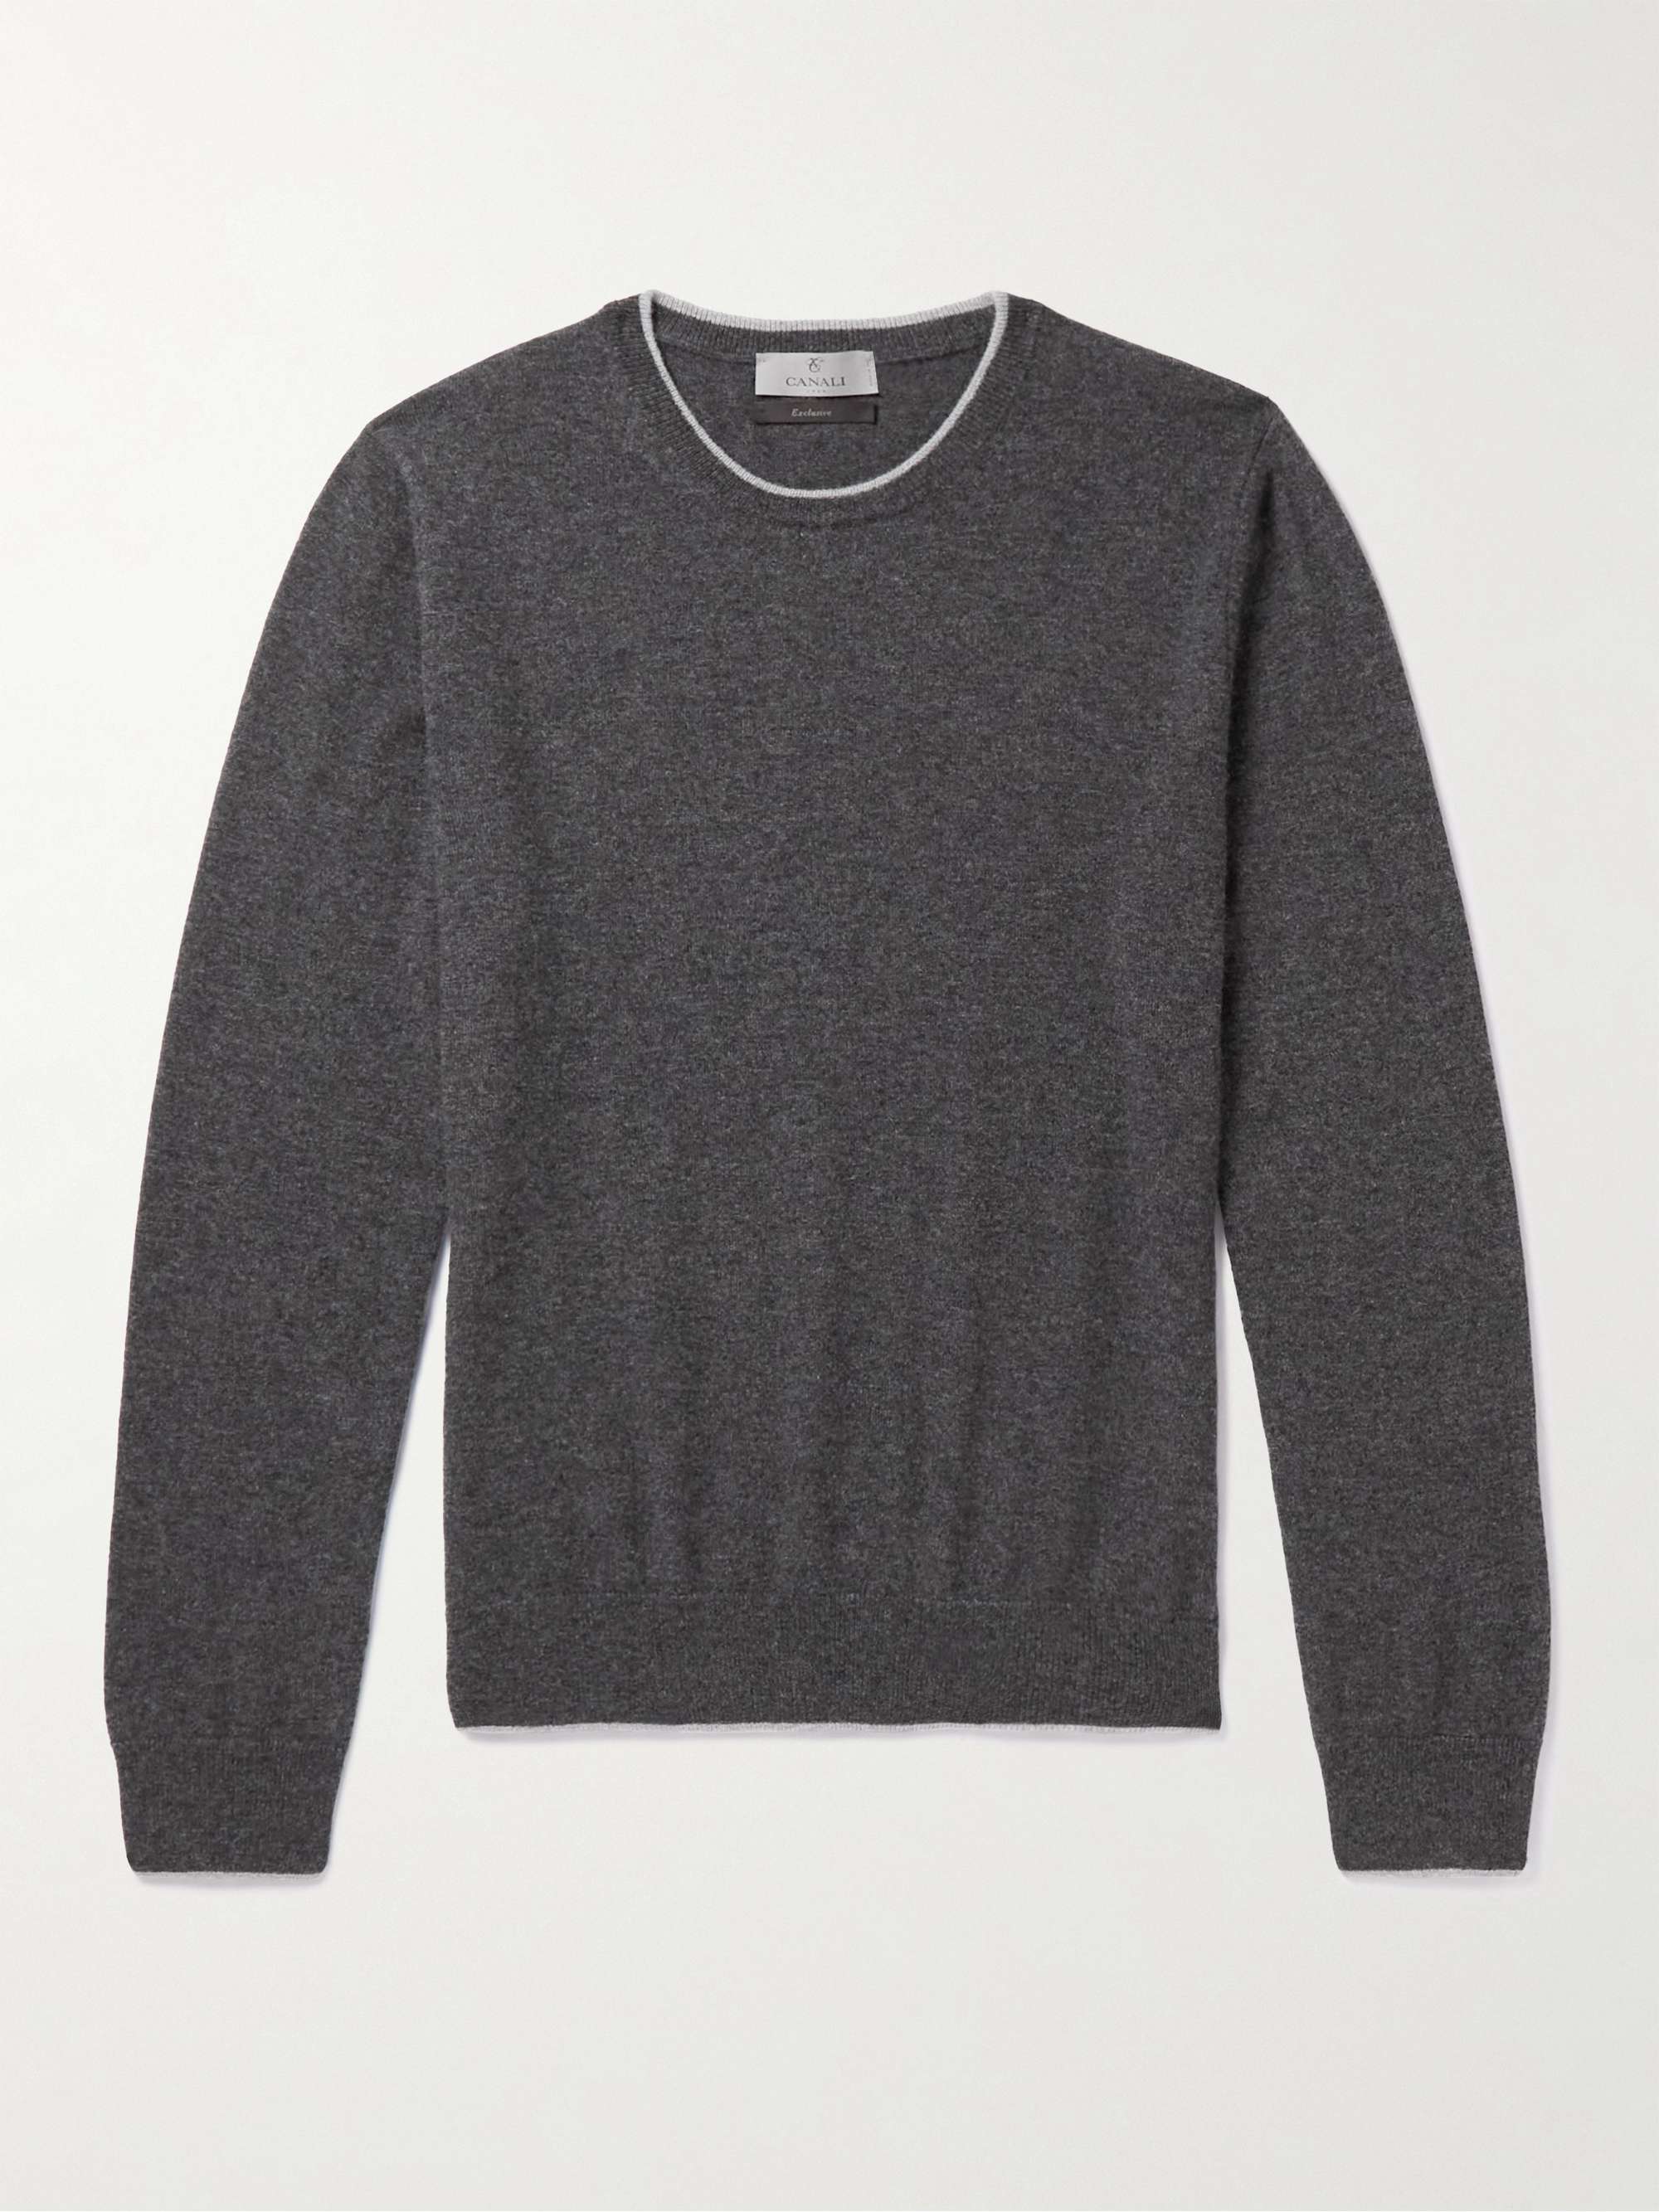 CANALI Slim-Fit Cashmere Sweater